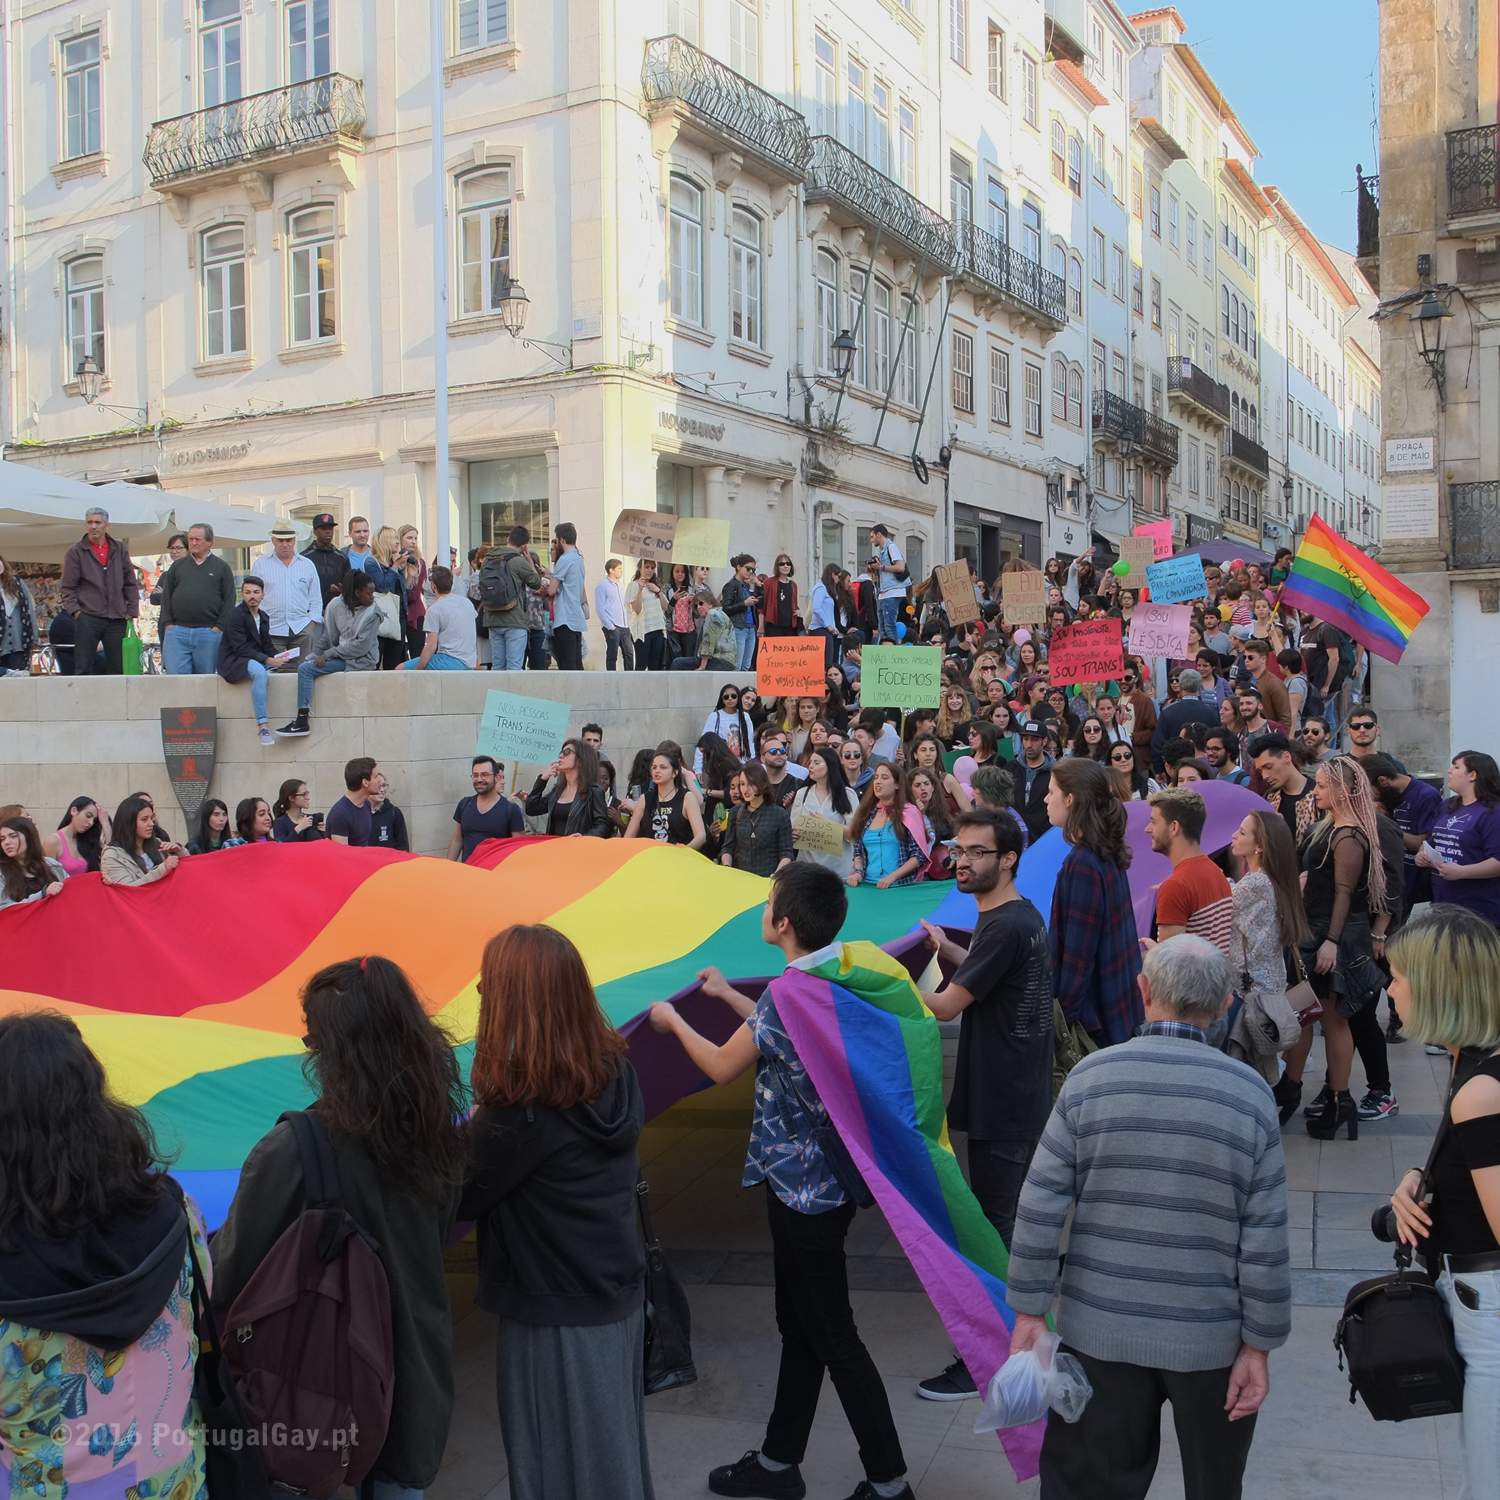 PORTUGAL: Coimbra Marcha Contra Homofobia e Transfobia